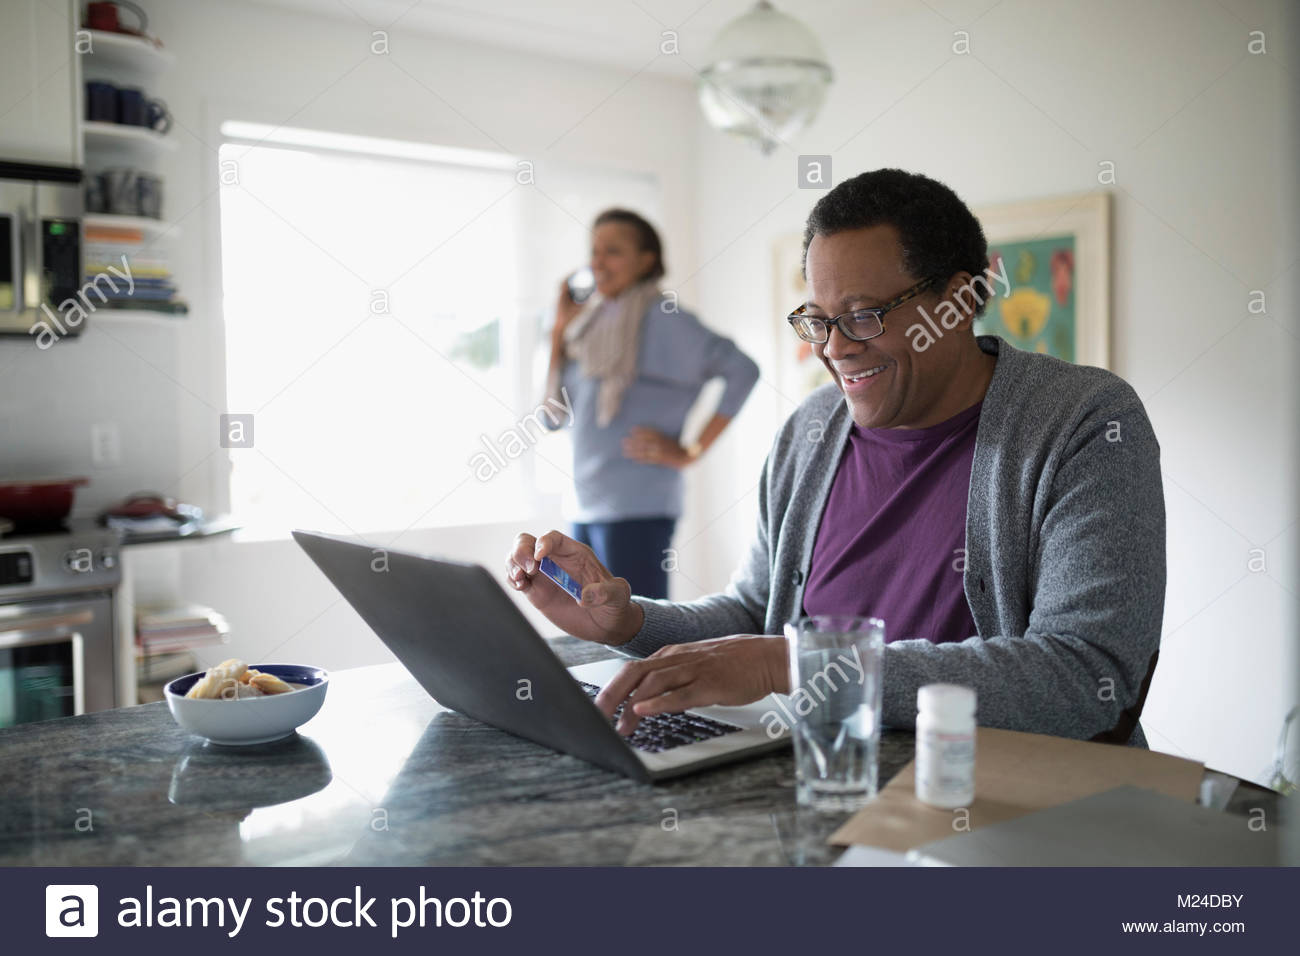 Smiling senior man with credit card paying bills online at laptop at kitchen counter Stock Photo